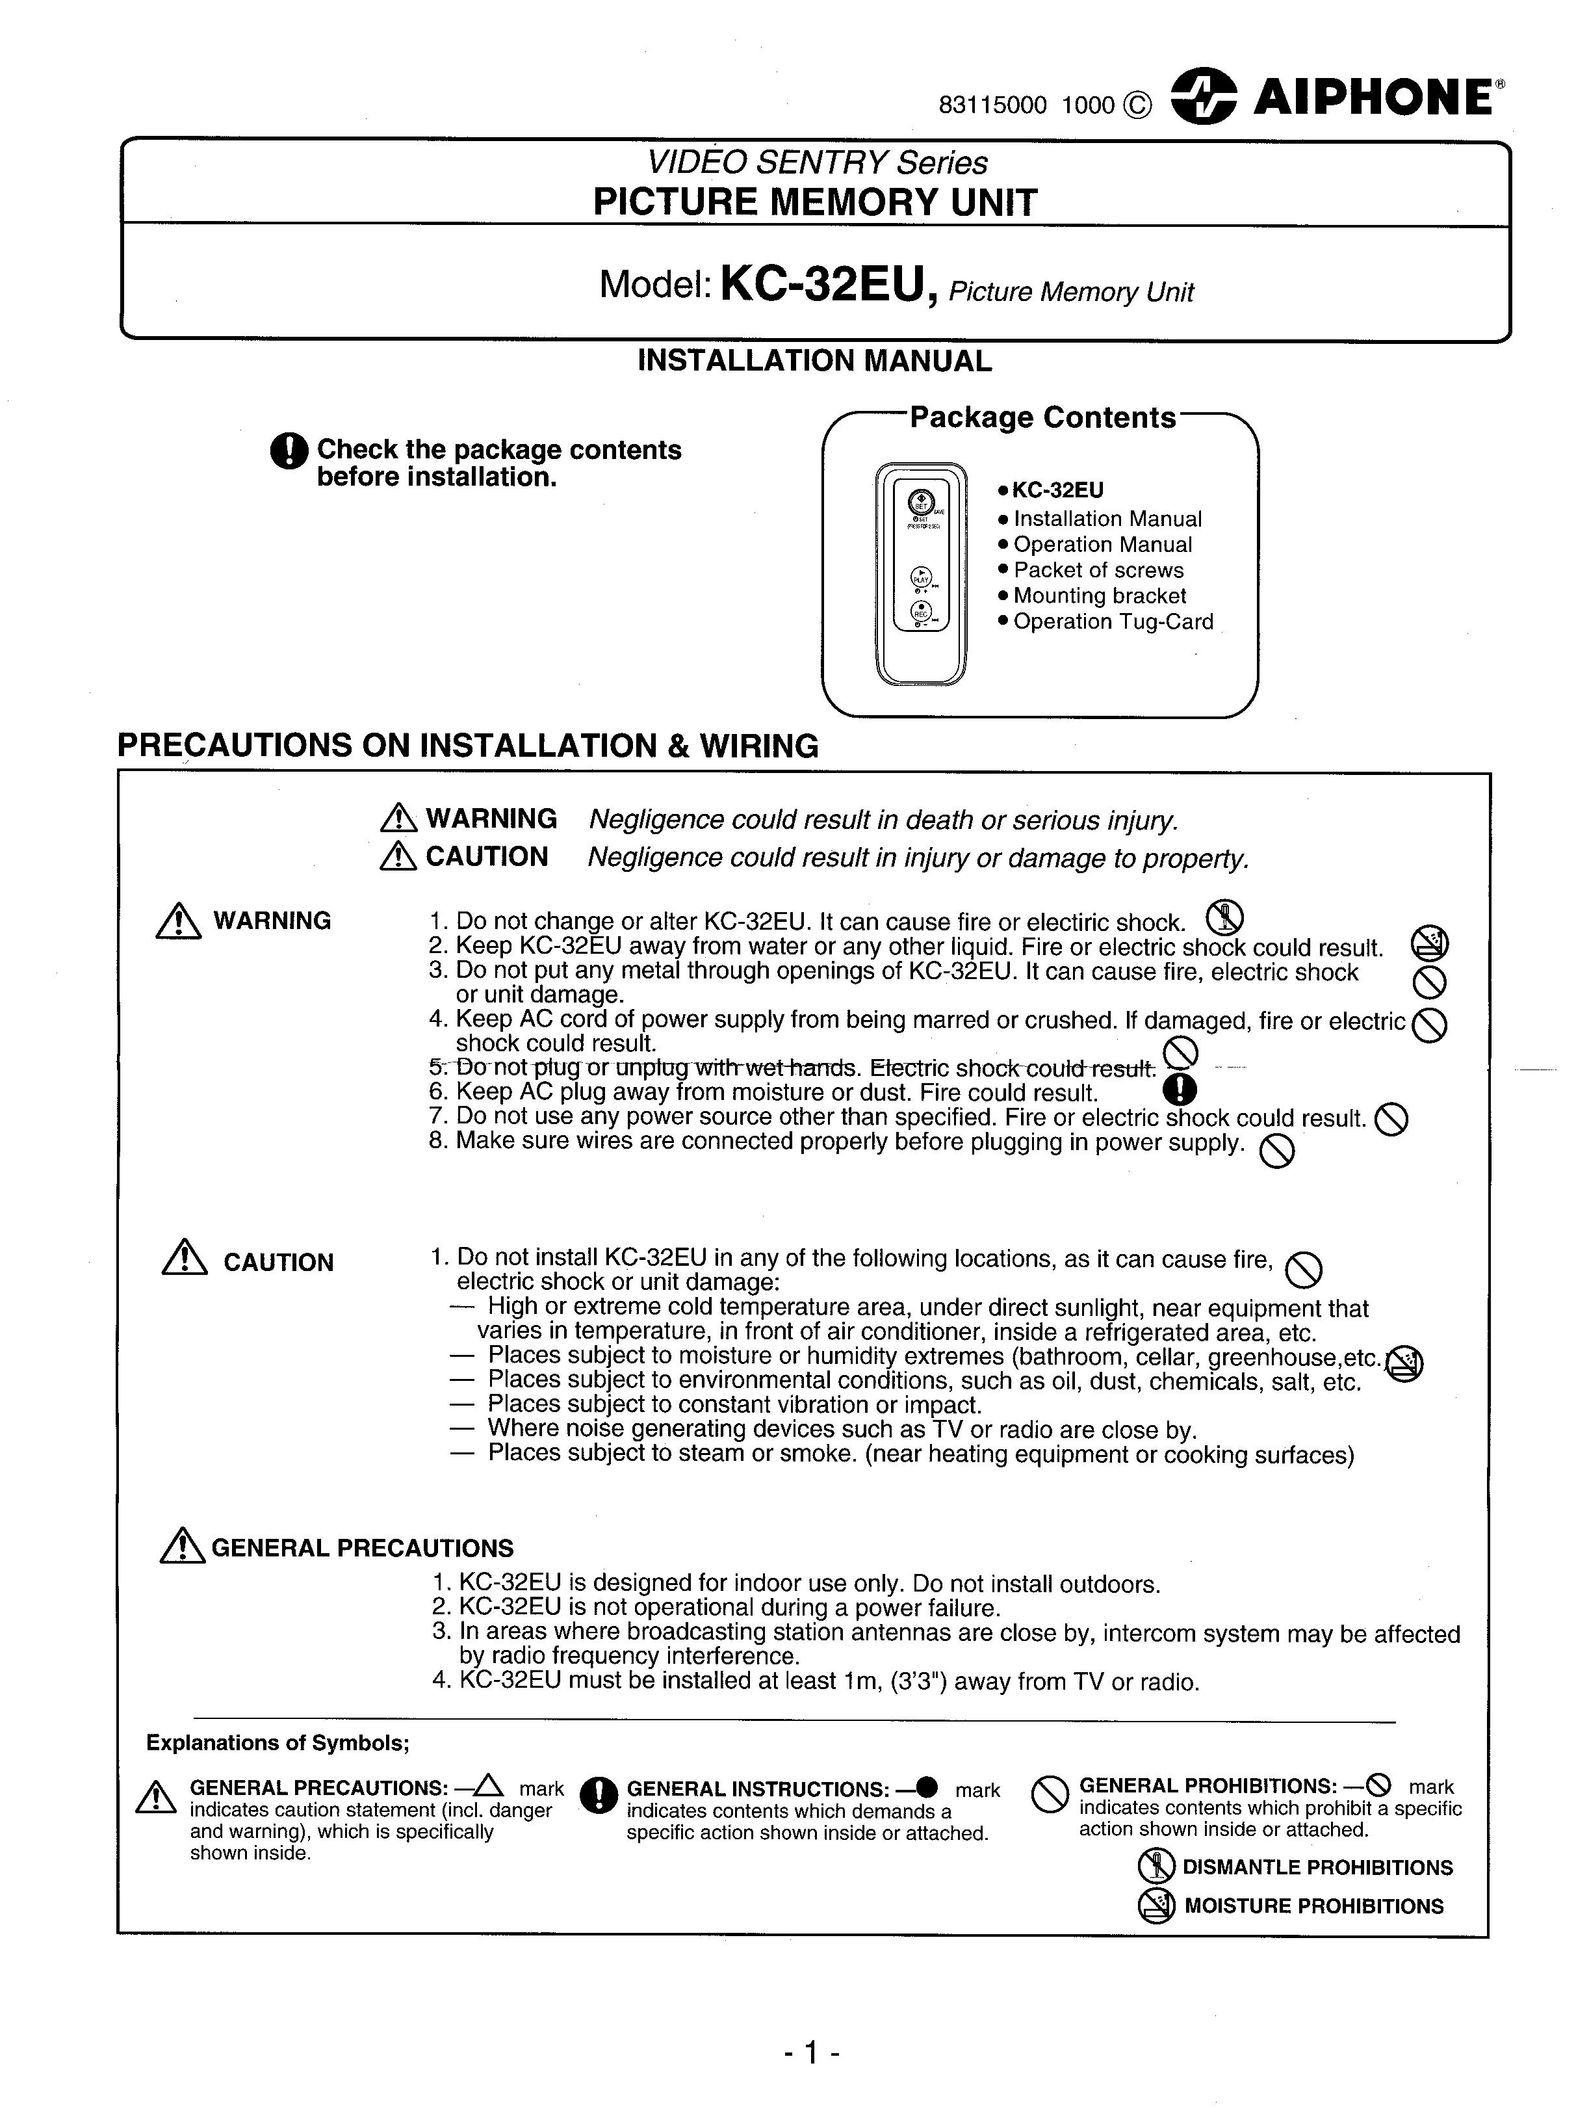 Aiphone KC-32EU CRT Television User Manual